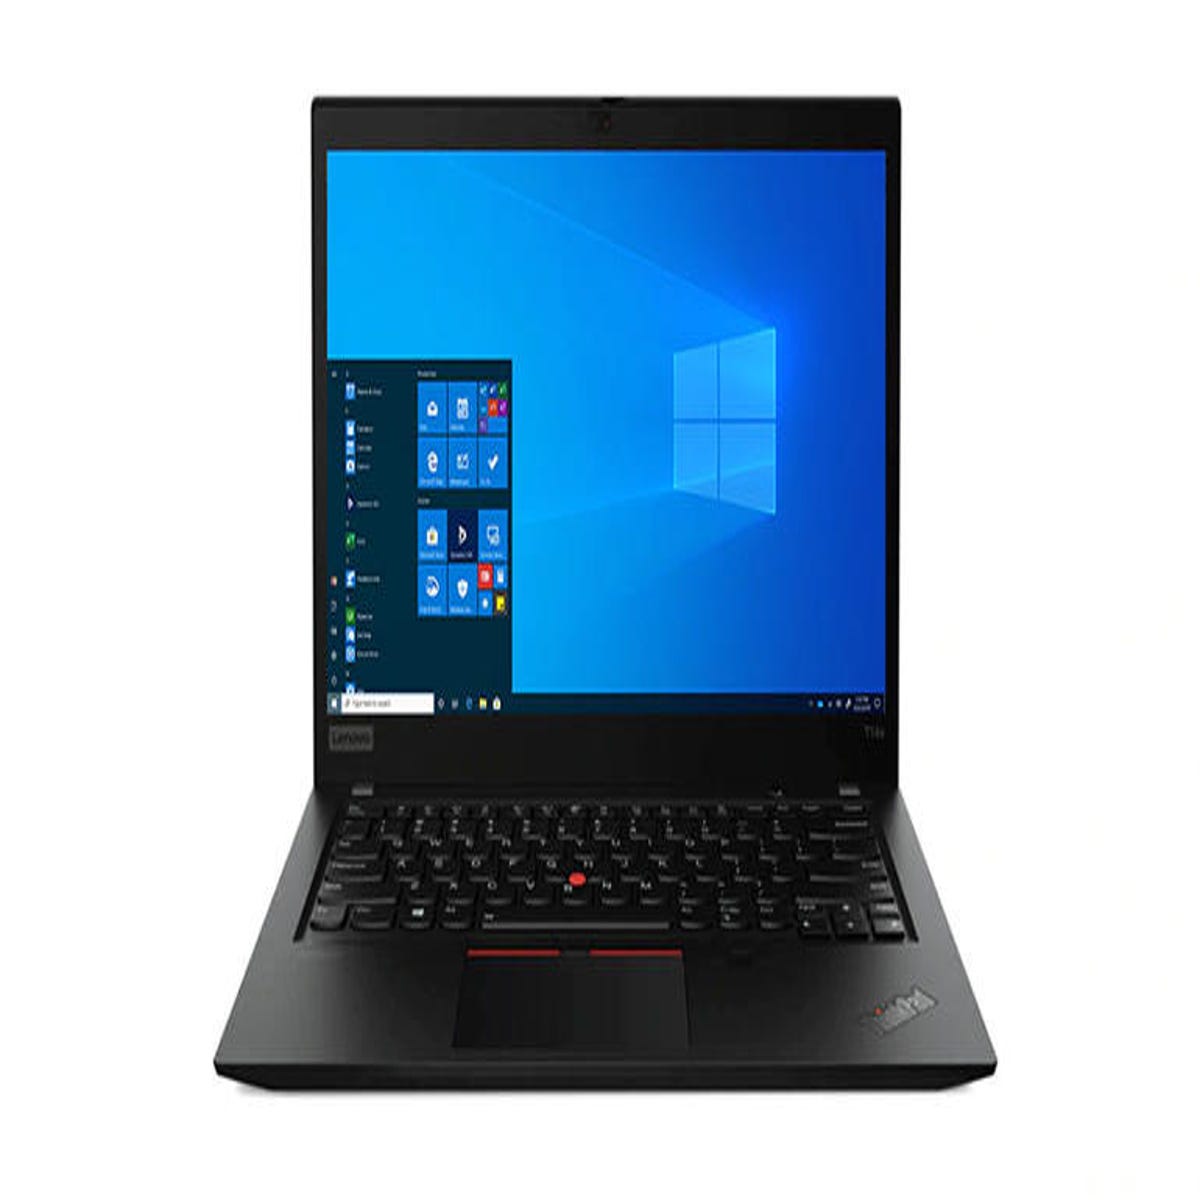 Lenovo thinkpad developer laptop refurbished switches